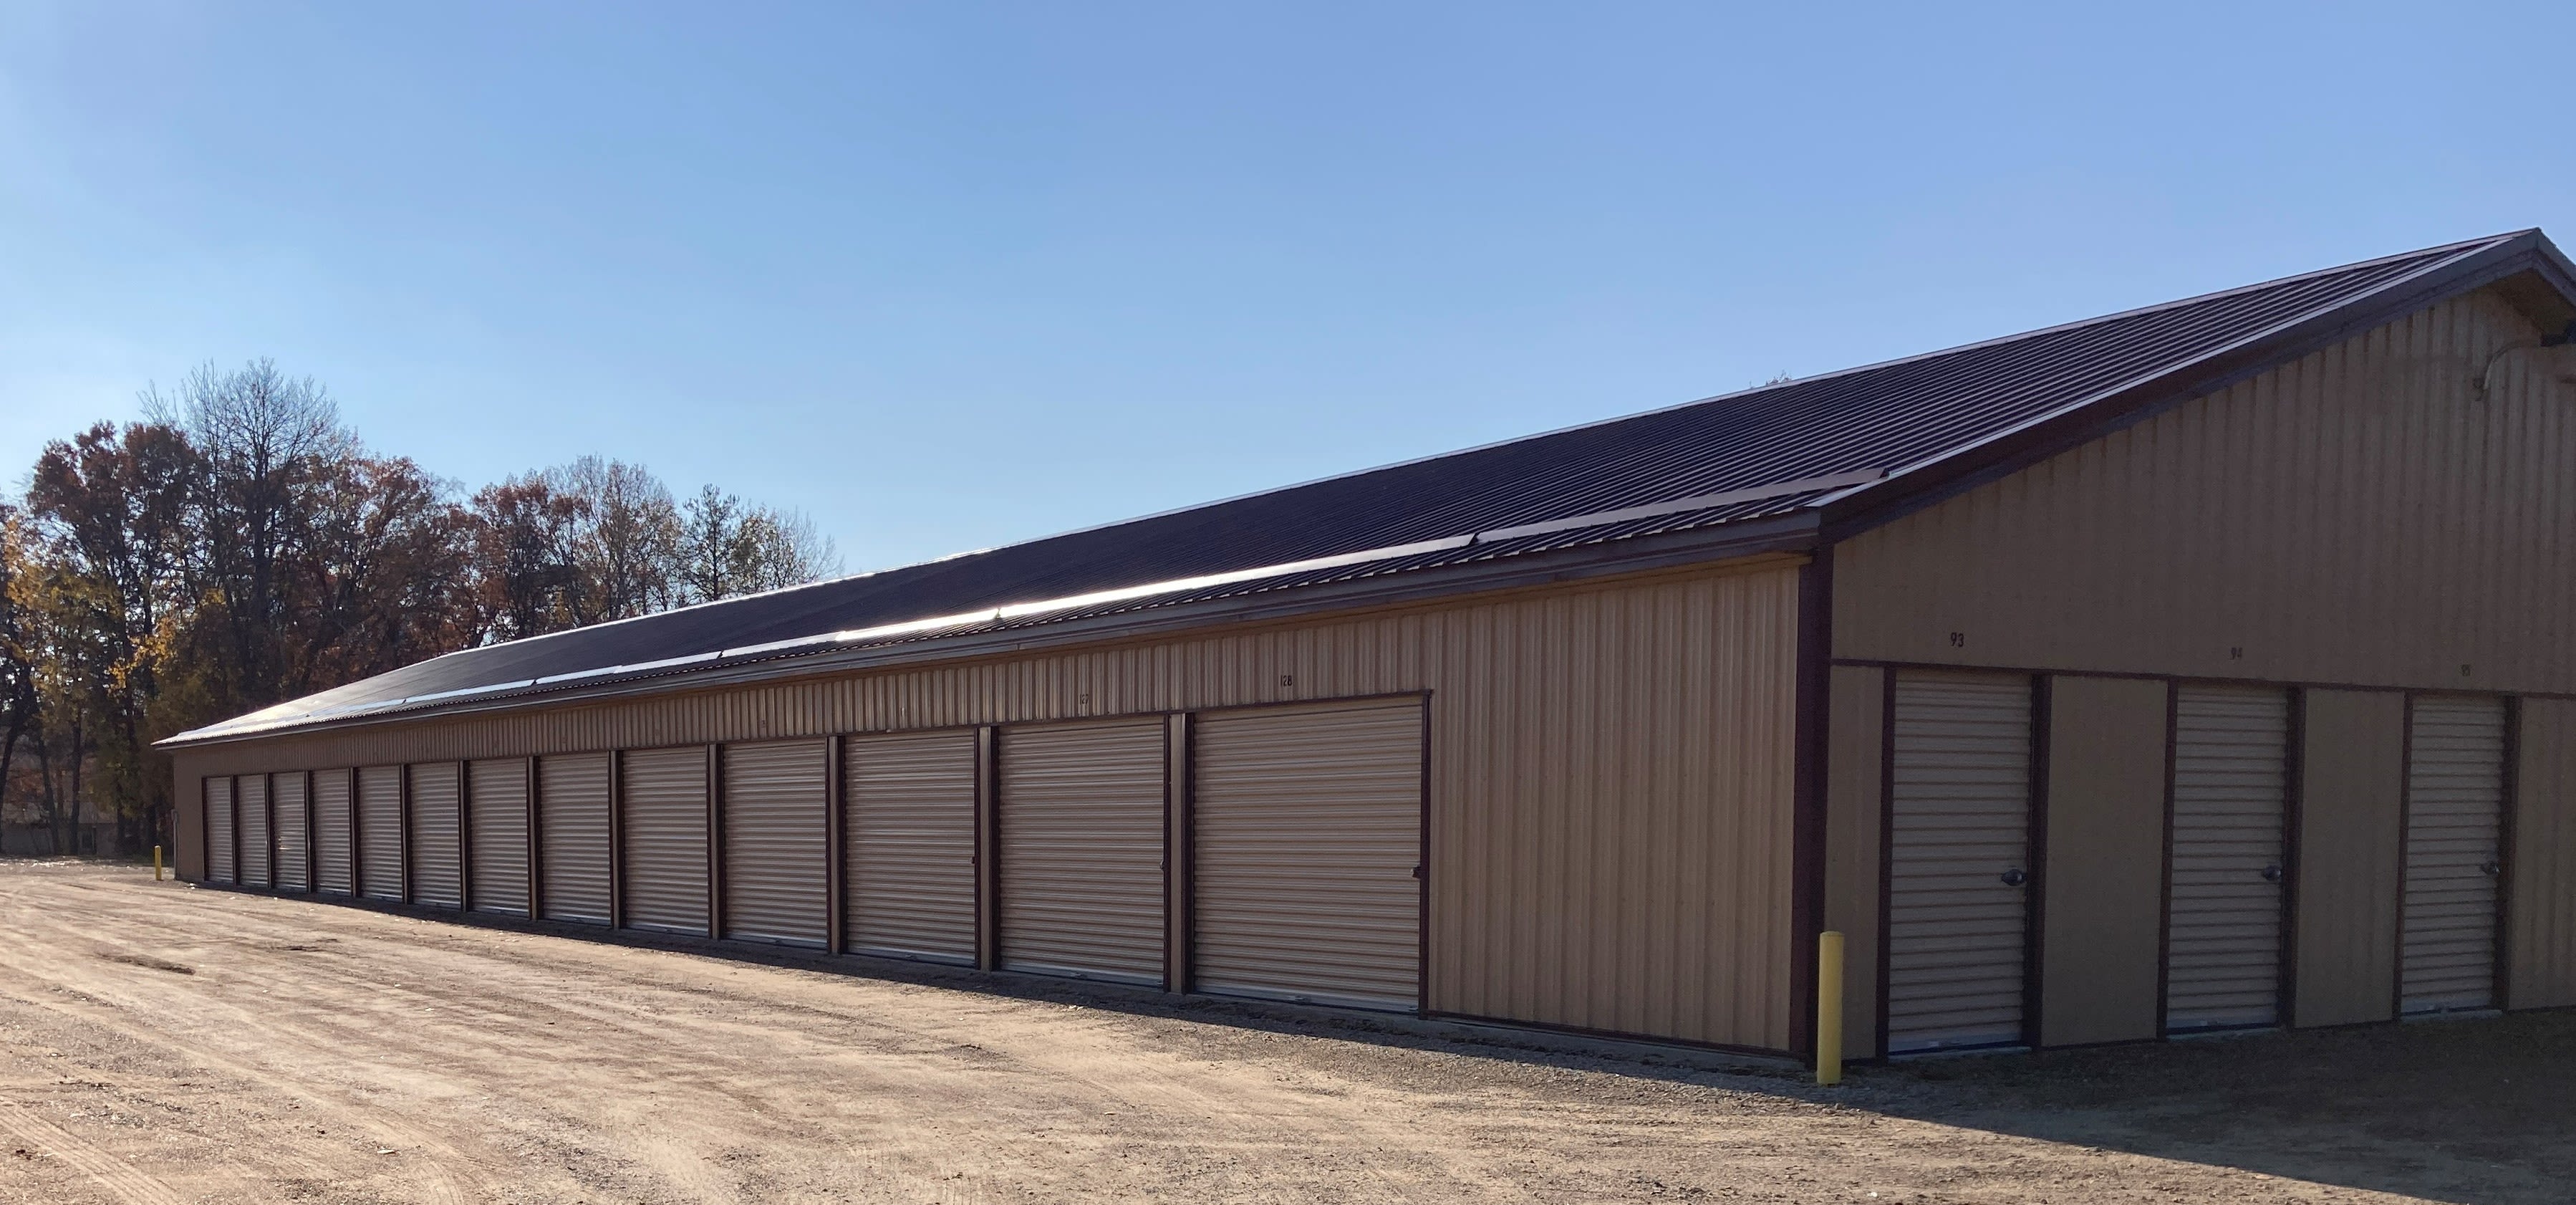 External storage units at KO Storage in Nisswa, Minnesota